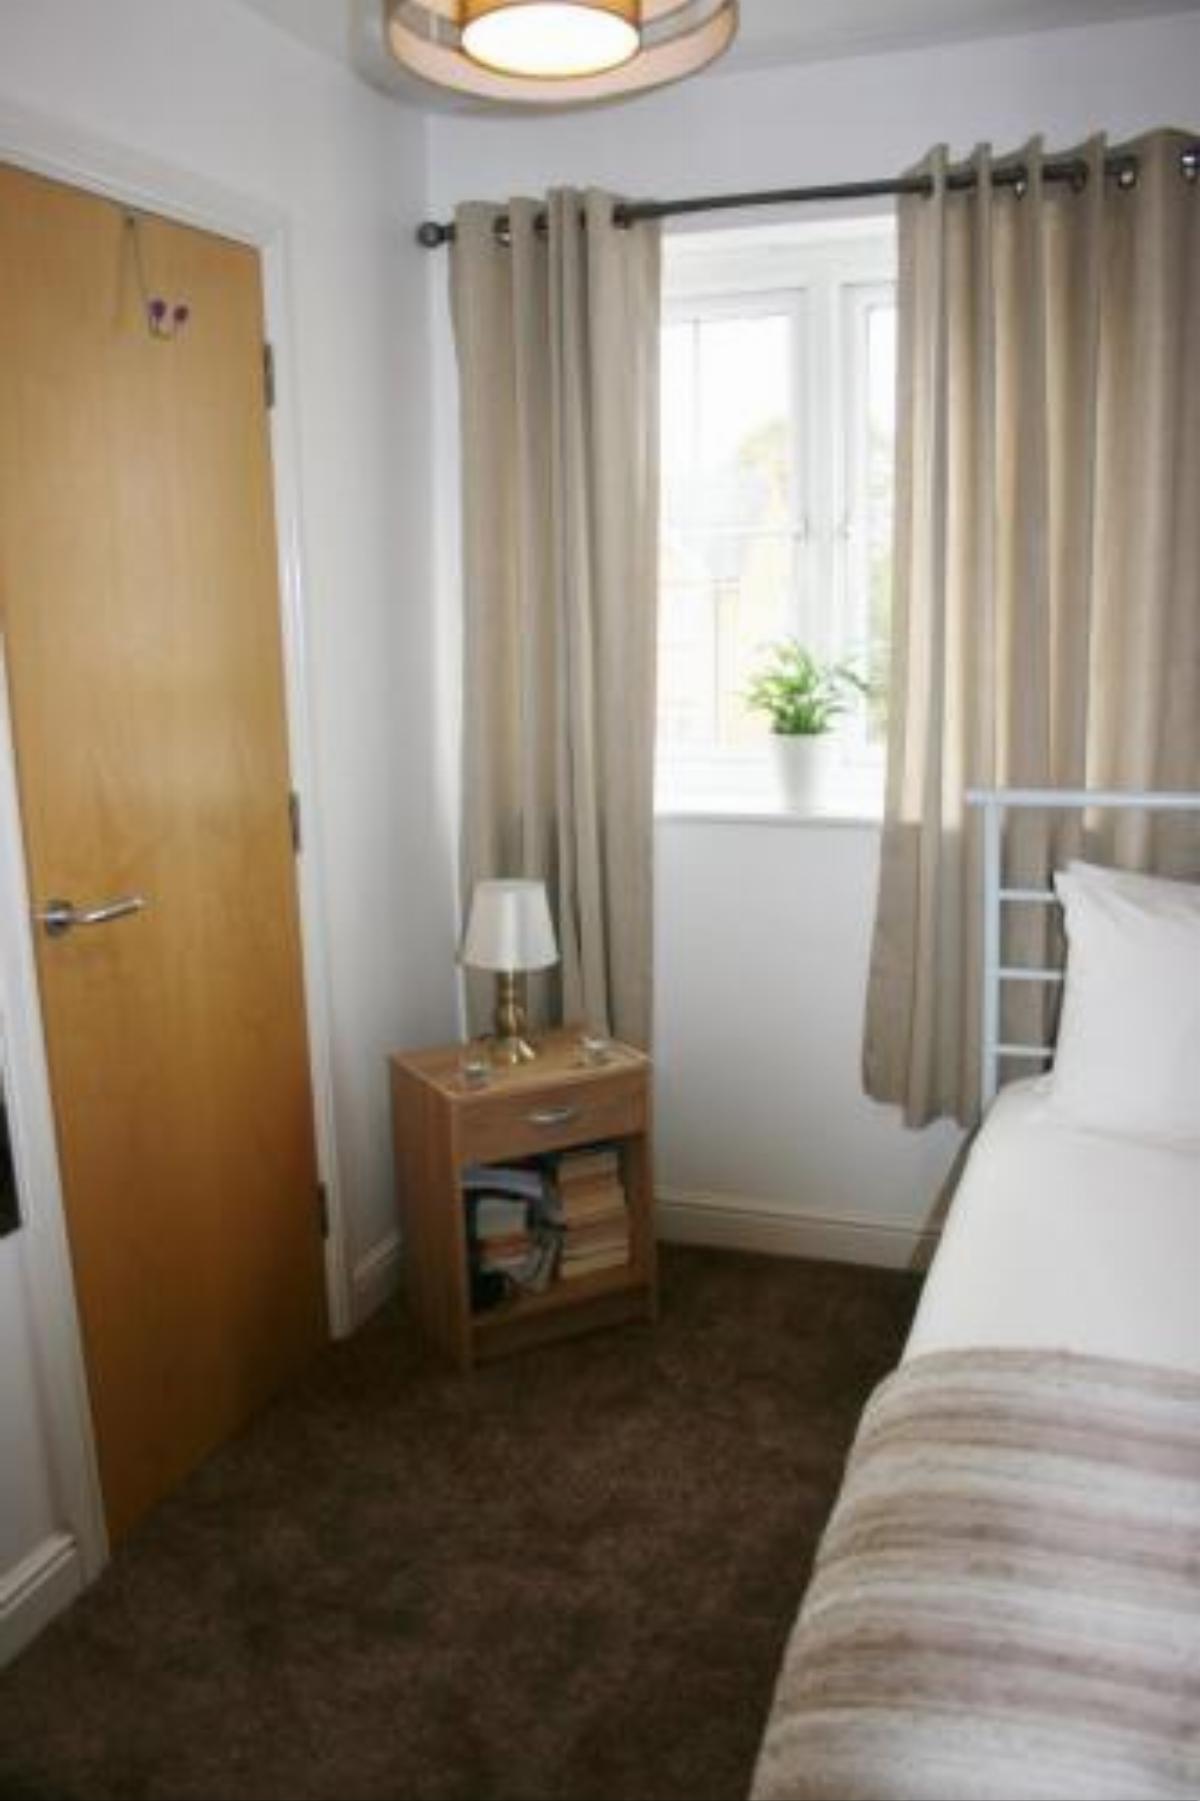 3 bedroom apartment Hotel Bedford United Kingdom